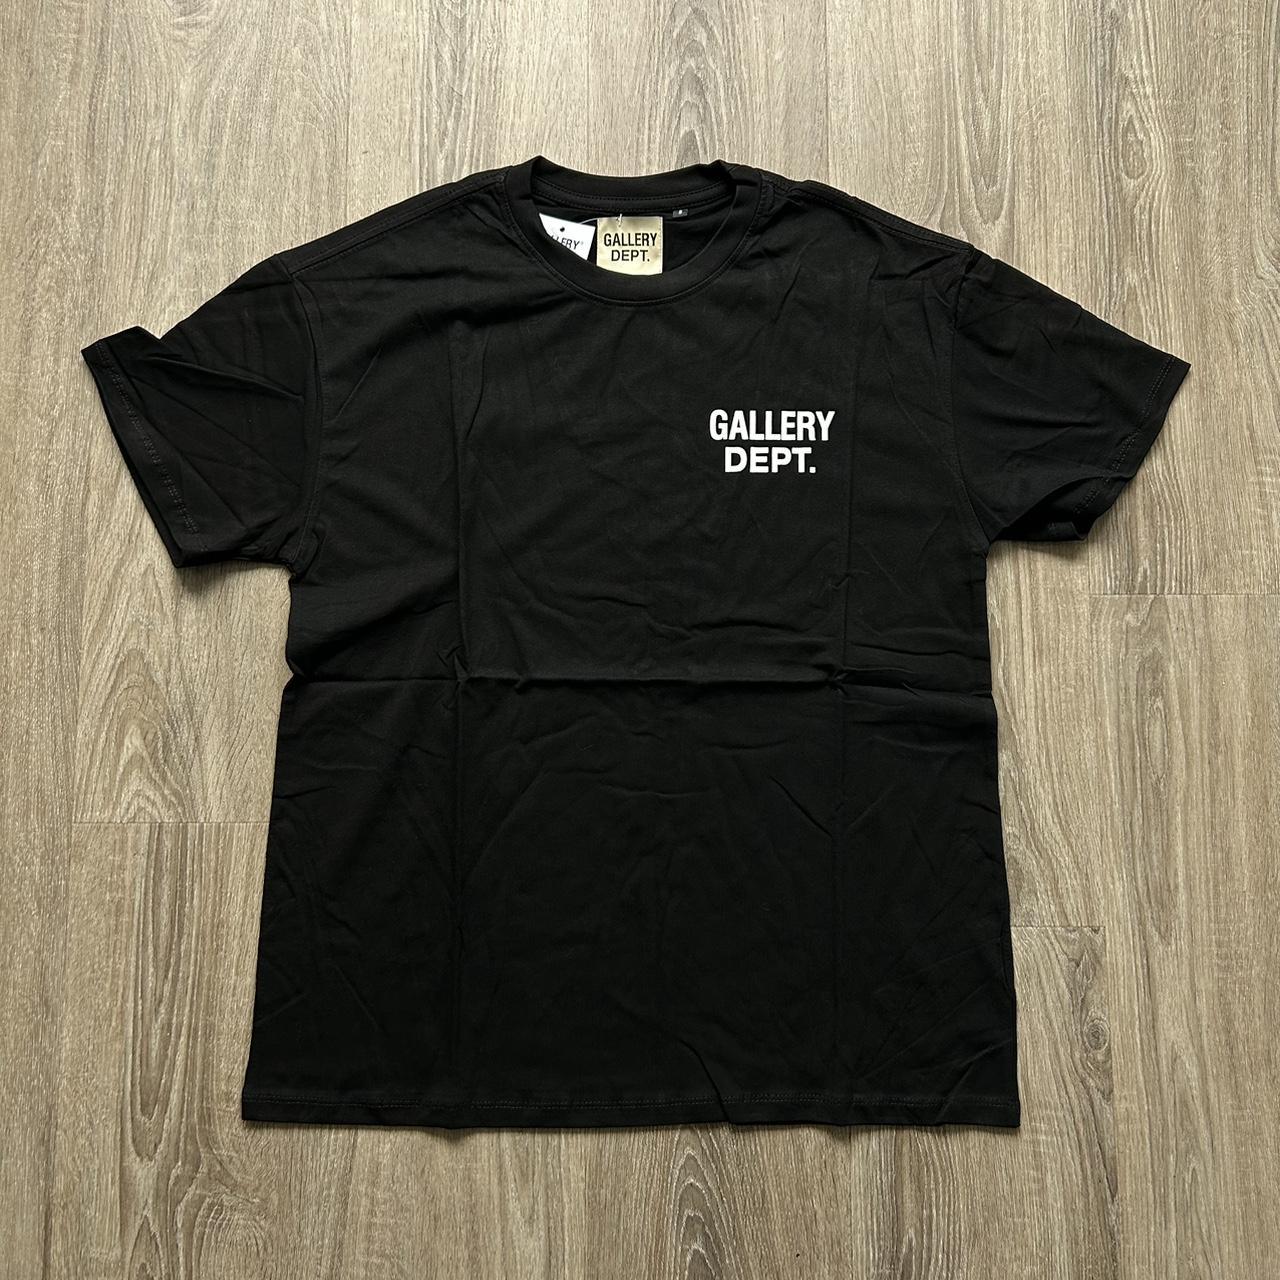 Gallery Dept. Men's Black and White T-shirt | Depop